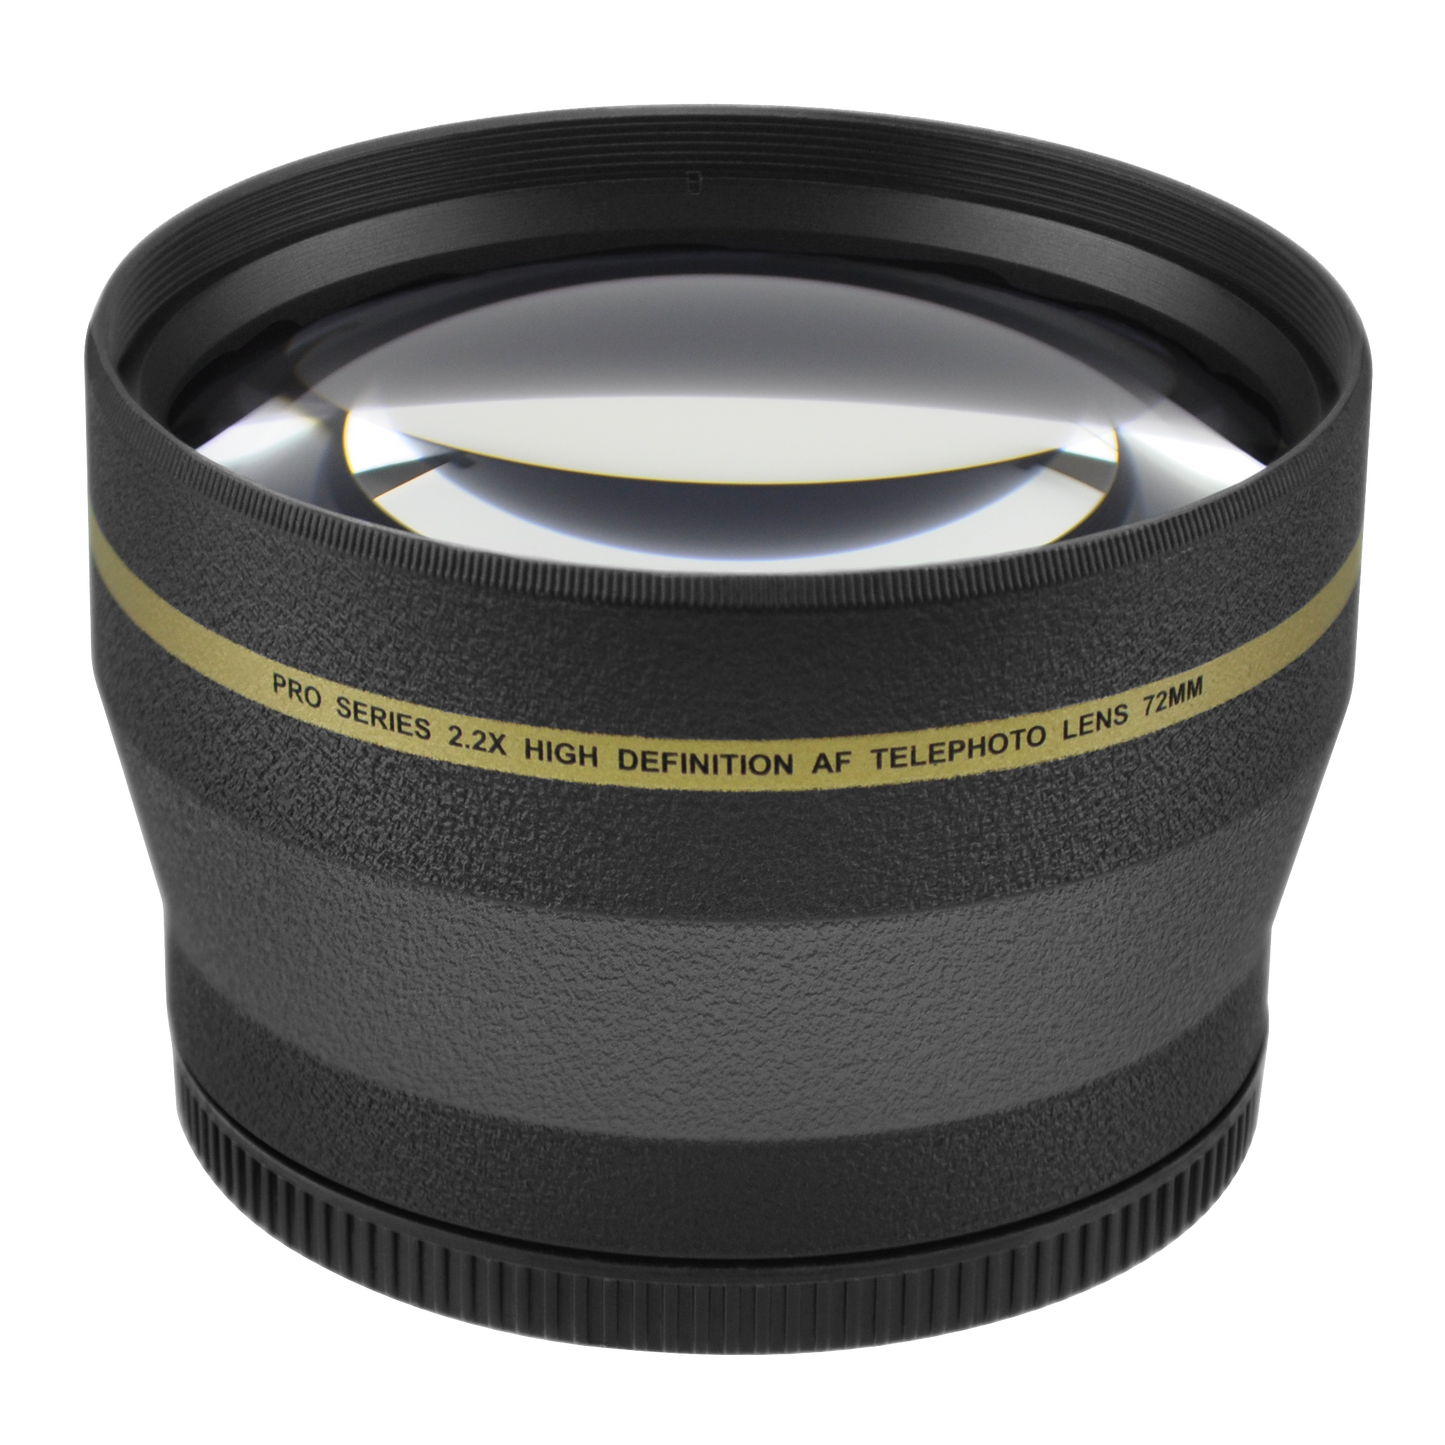 Pro series 2.2x High Definition AF Telephoto Lens - 72MM